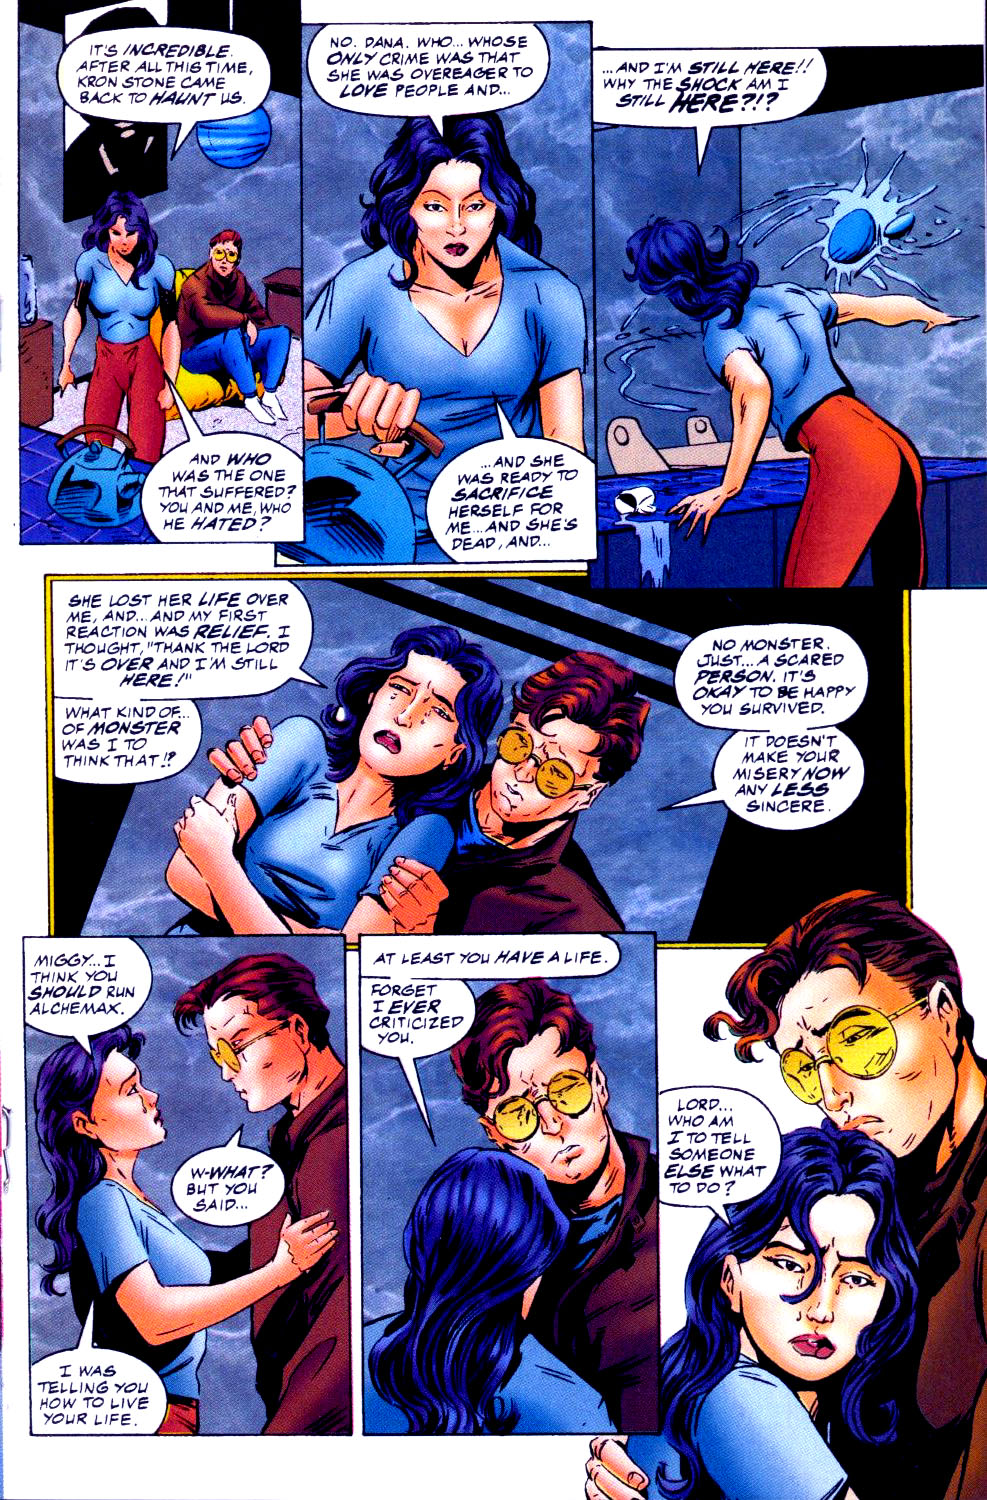 Spider-Man 2099 (1992) issue 39 - Page 14